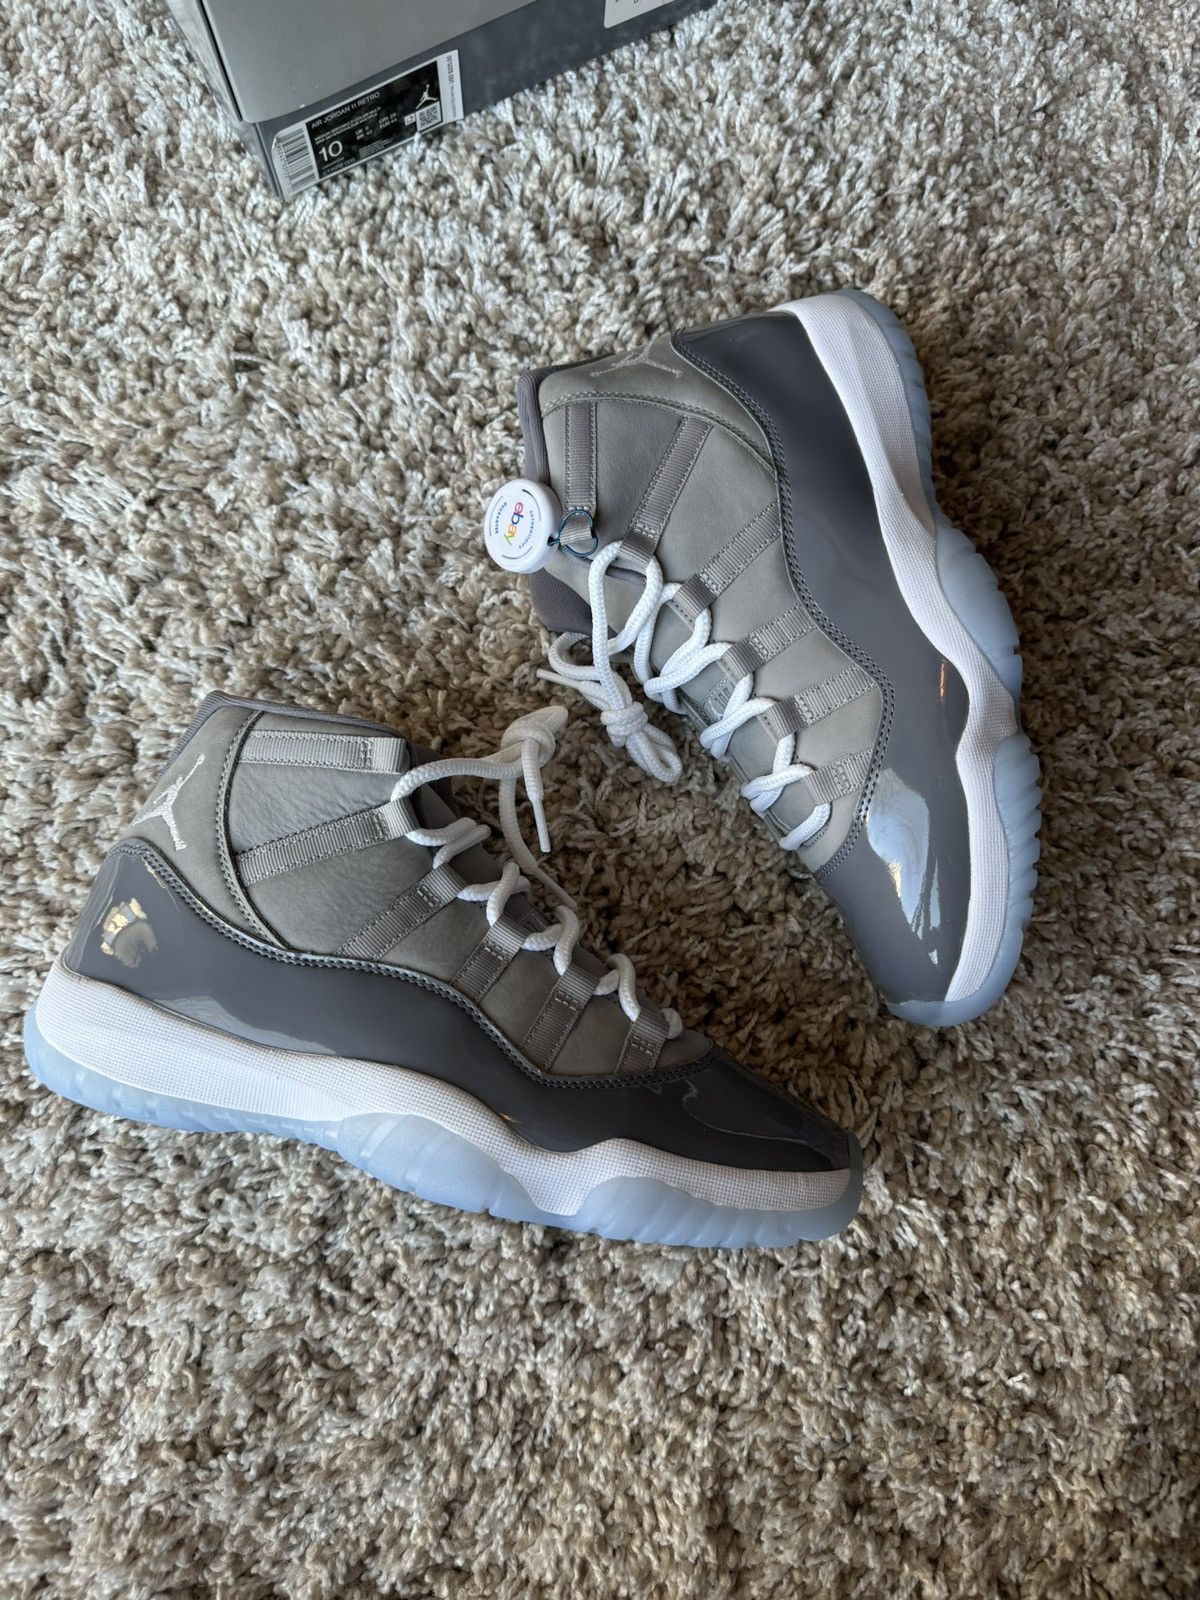 Pre-owned Jordan Nike Cool Grey 11 Shoes